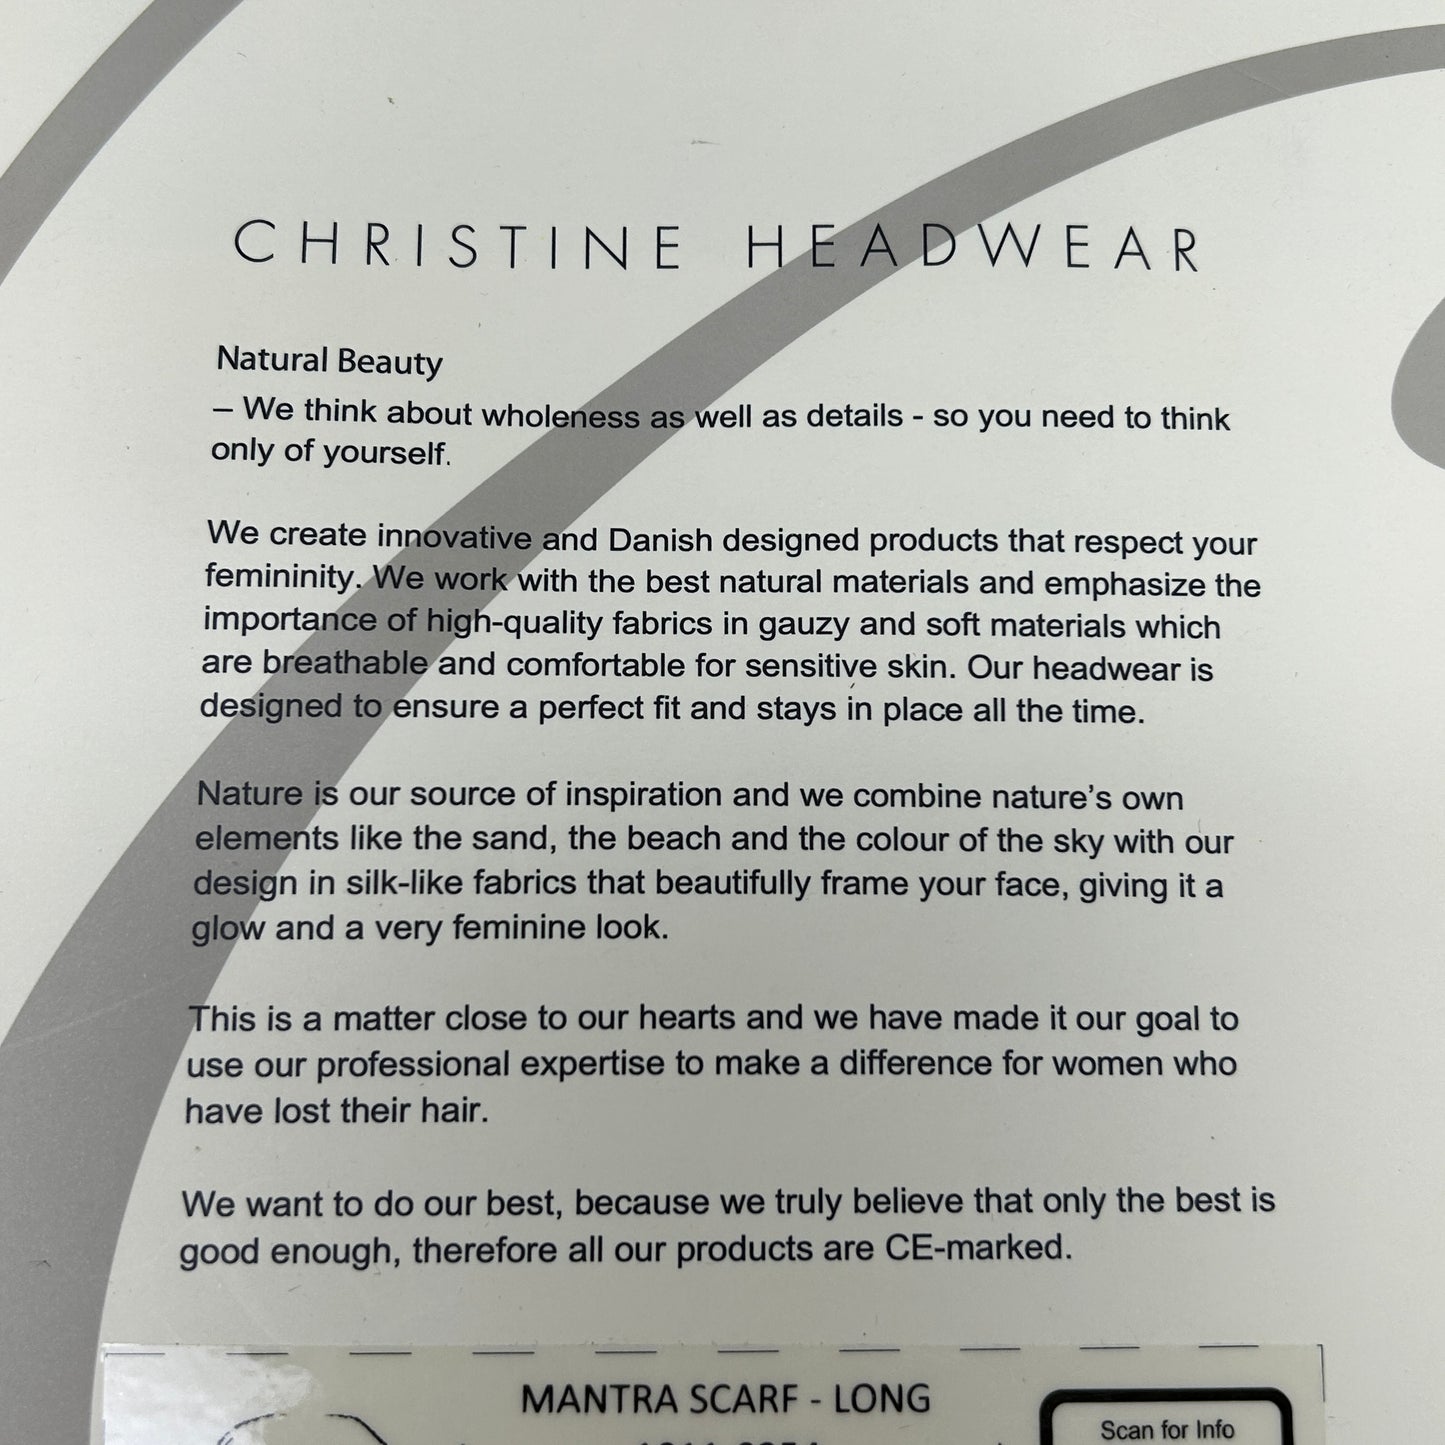 CHRISTINE HEADWEAR Mantra Scarf Long Cerise 1011-0254 (New)